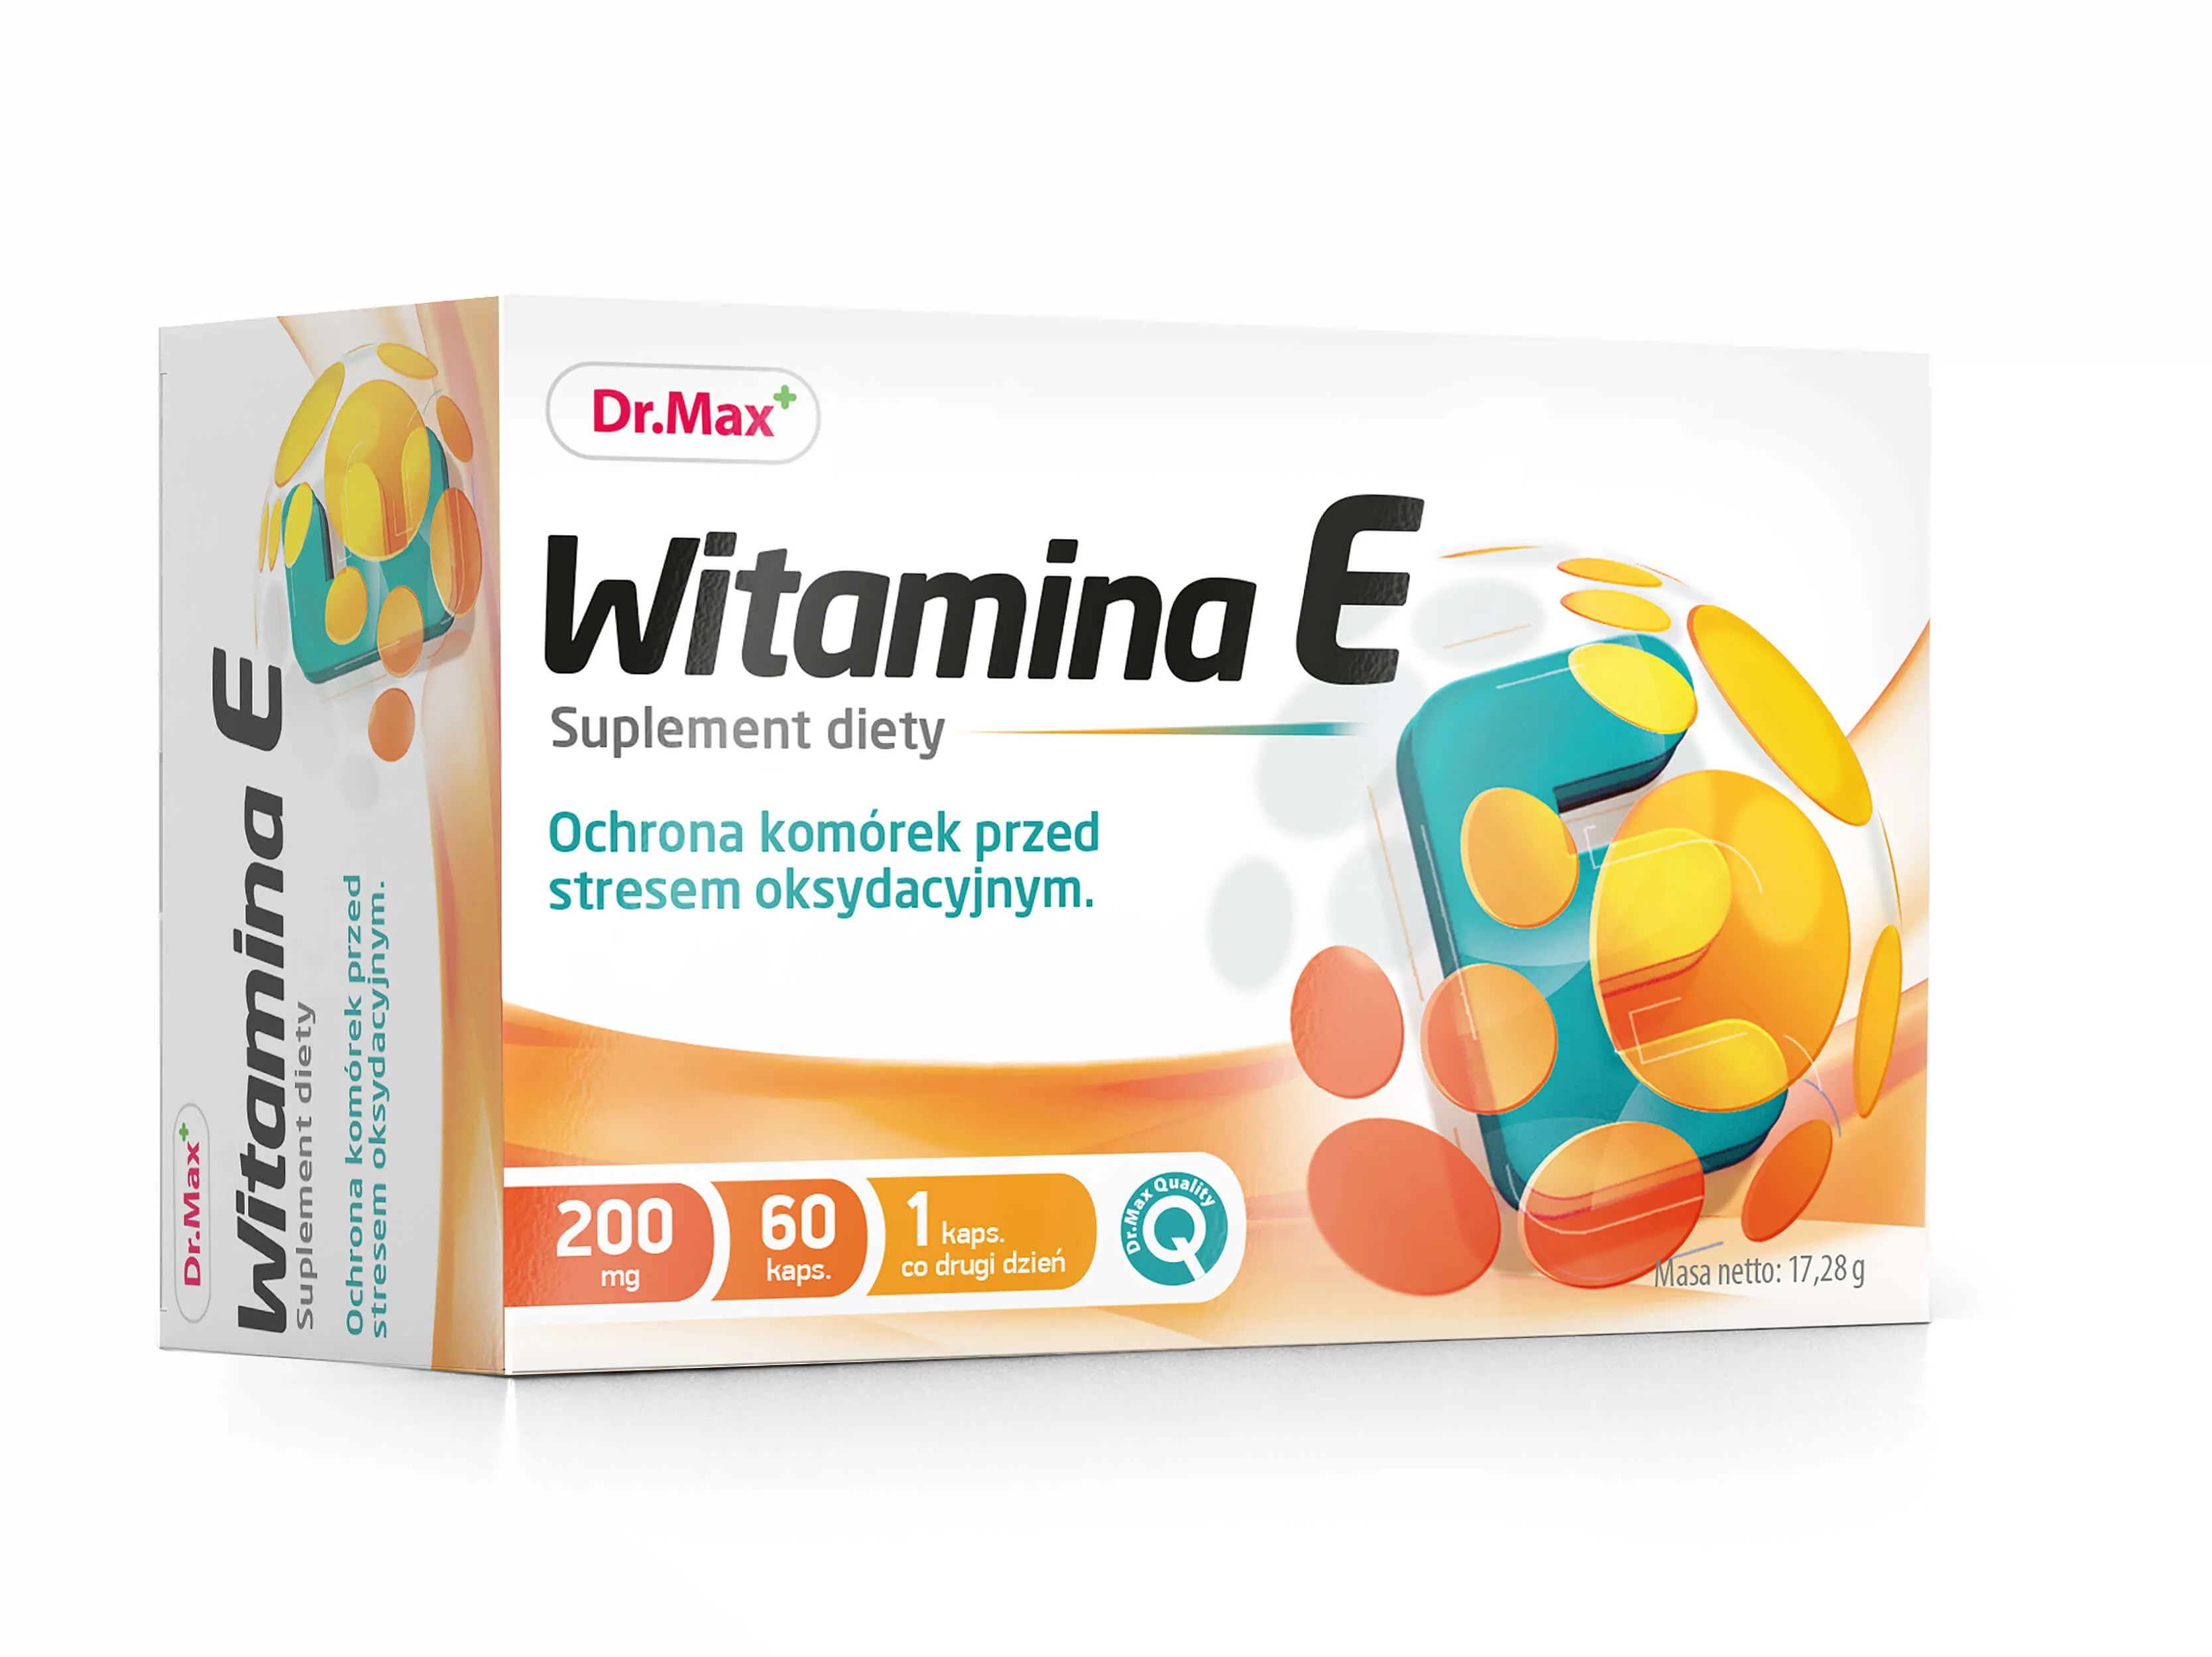 Witamina E 200 mg Dr.Max, suplement diety, 60 kapsułek